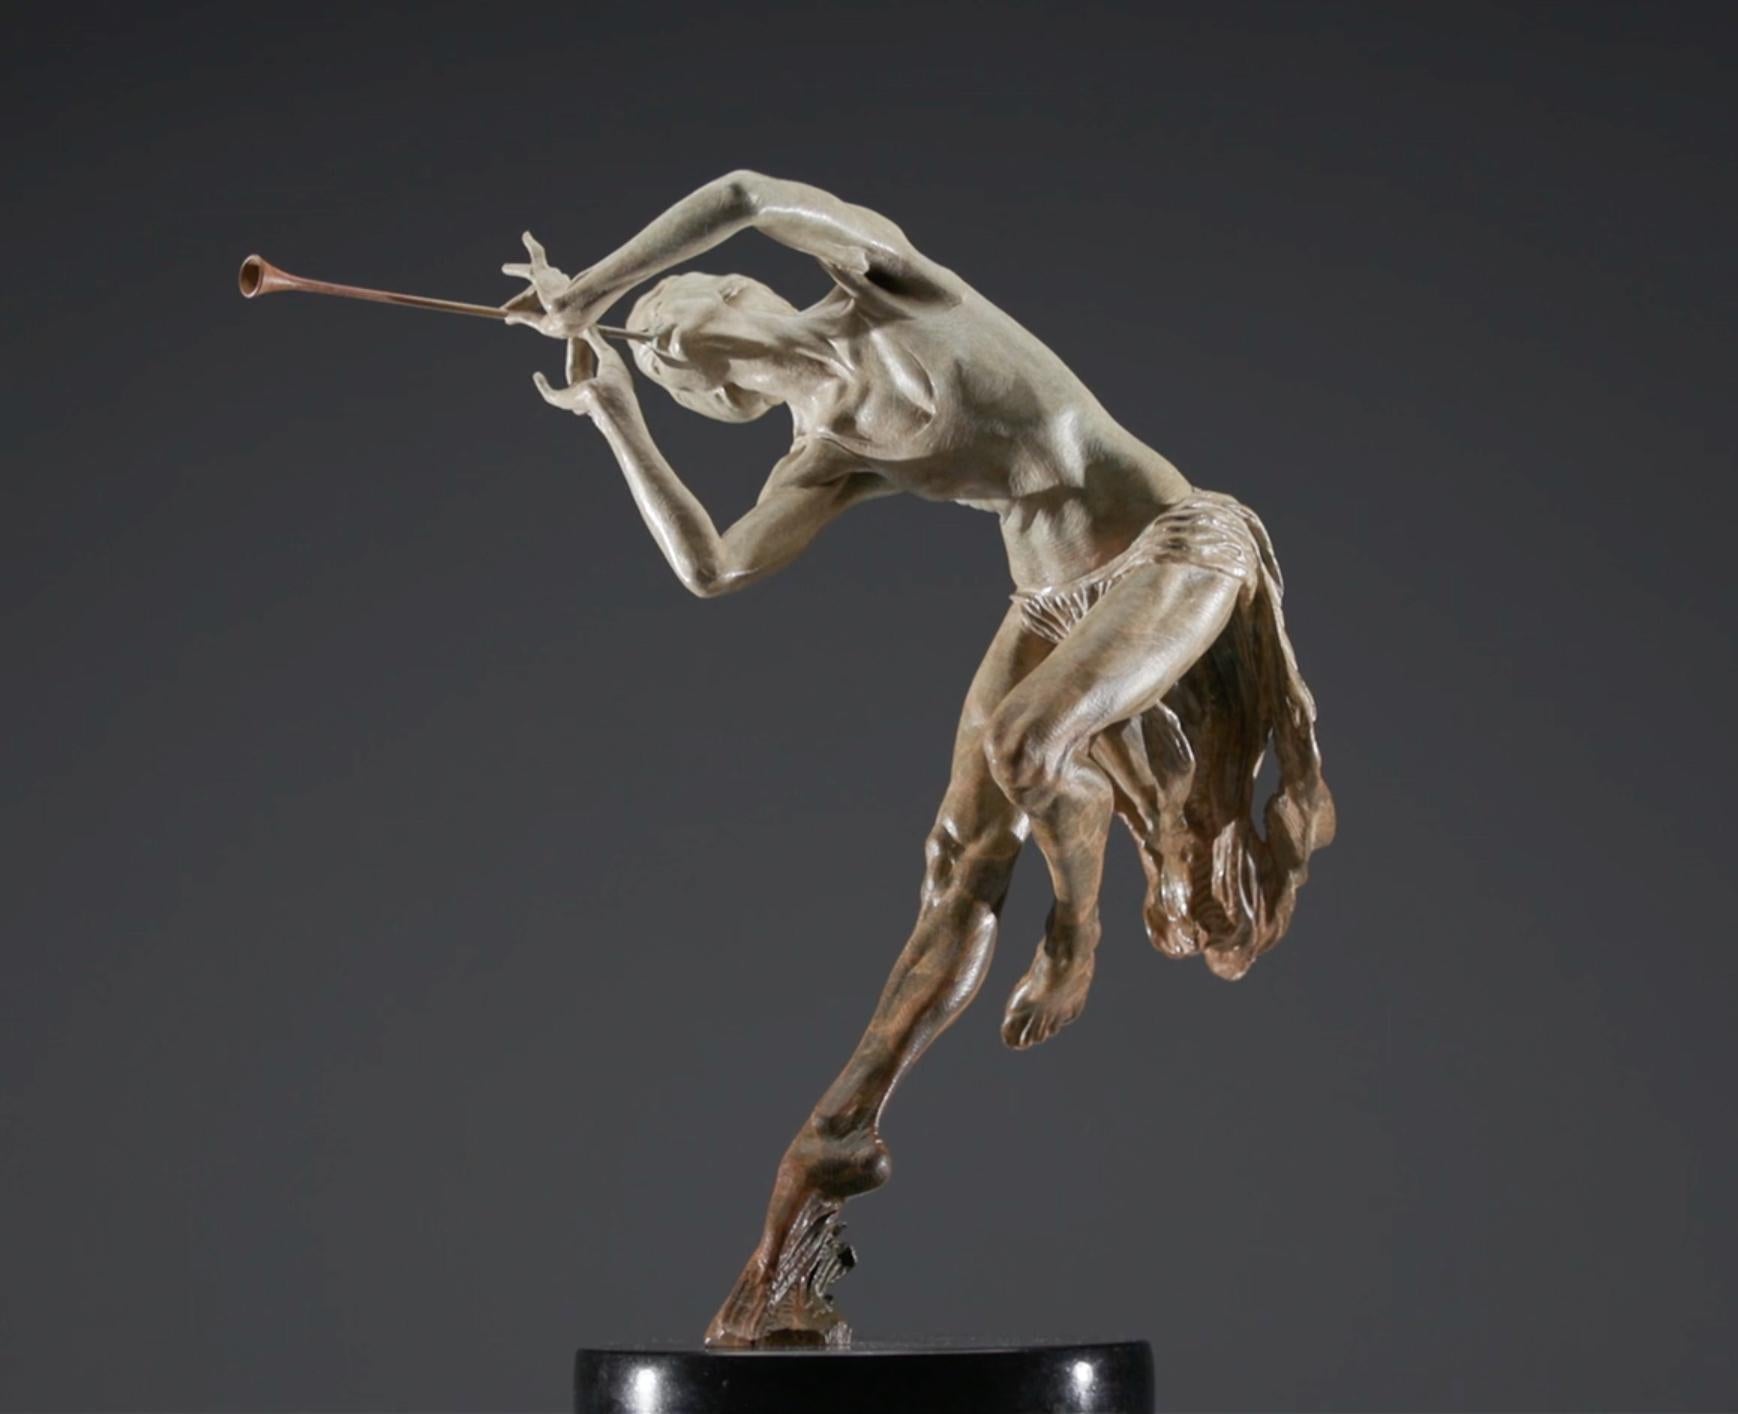 Trumpeter Draped, Atelier - Gold Figurative Sculpture by Richard MacDonald